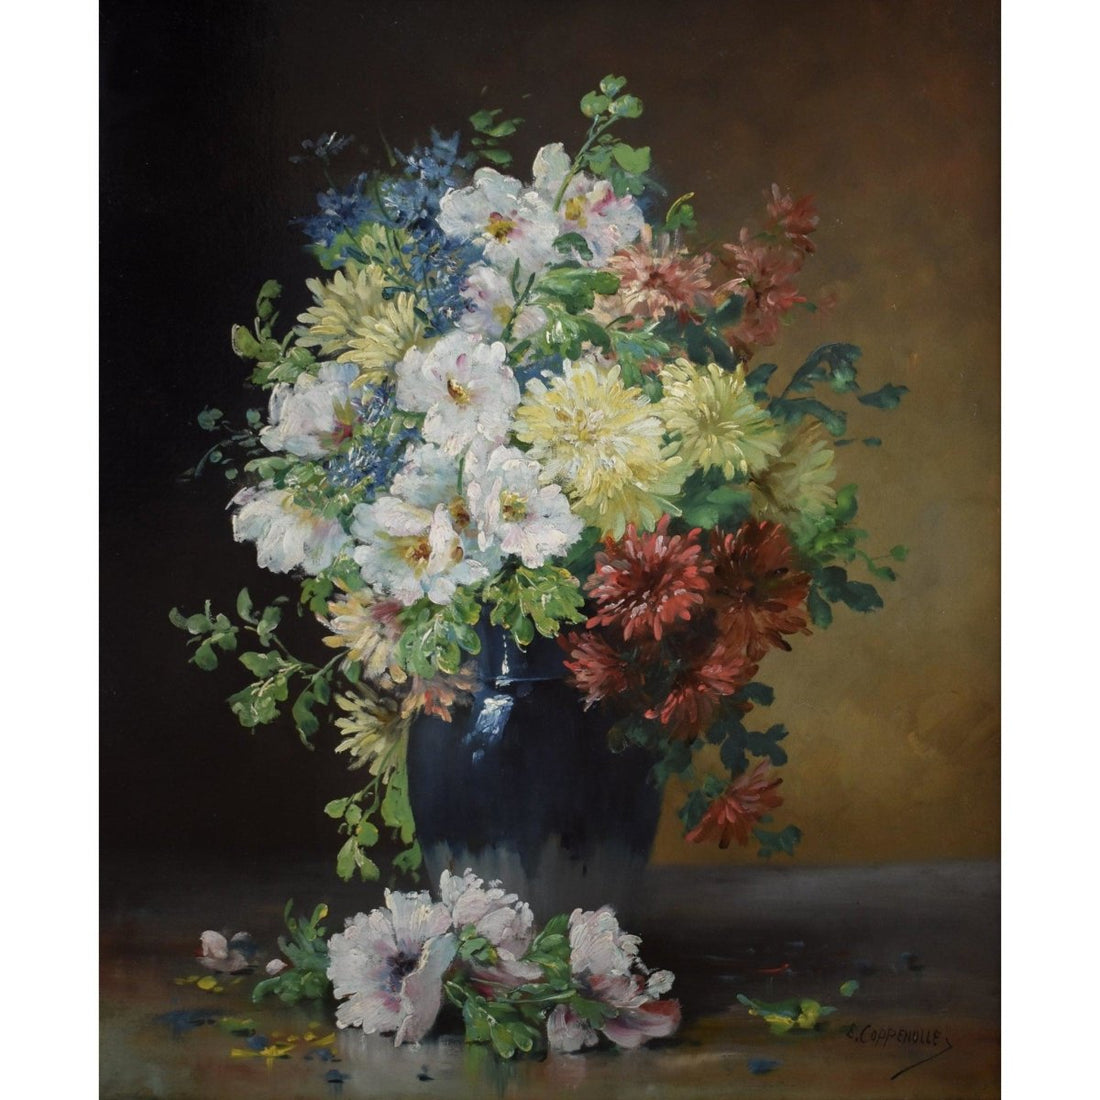 Edmond van Coppenolle – Flowers in a Vase - Winckelmann Gallery